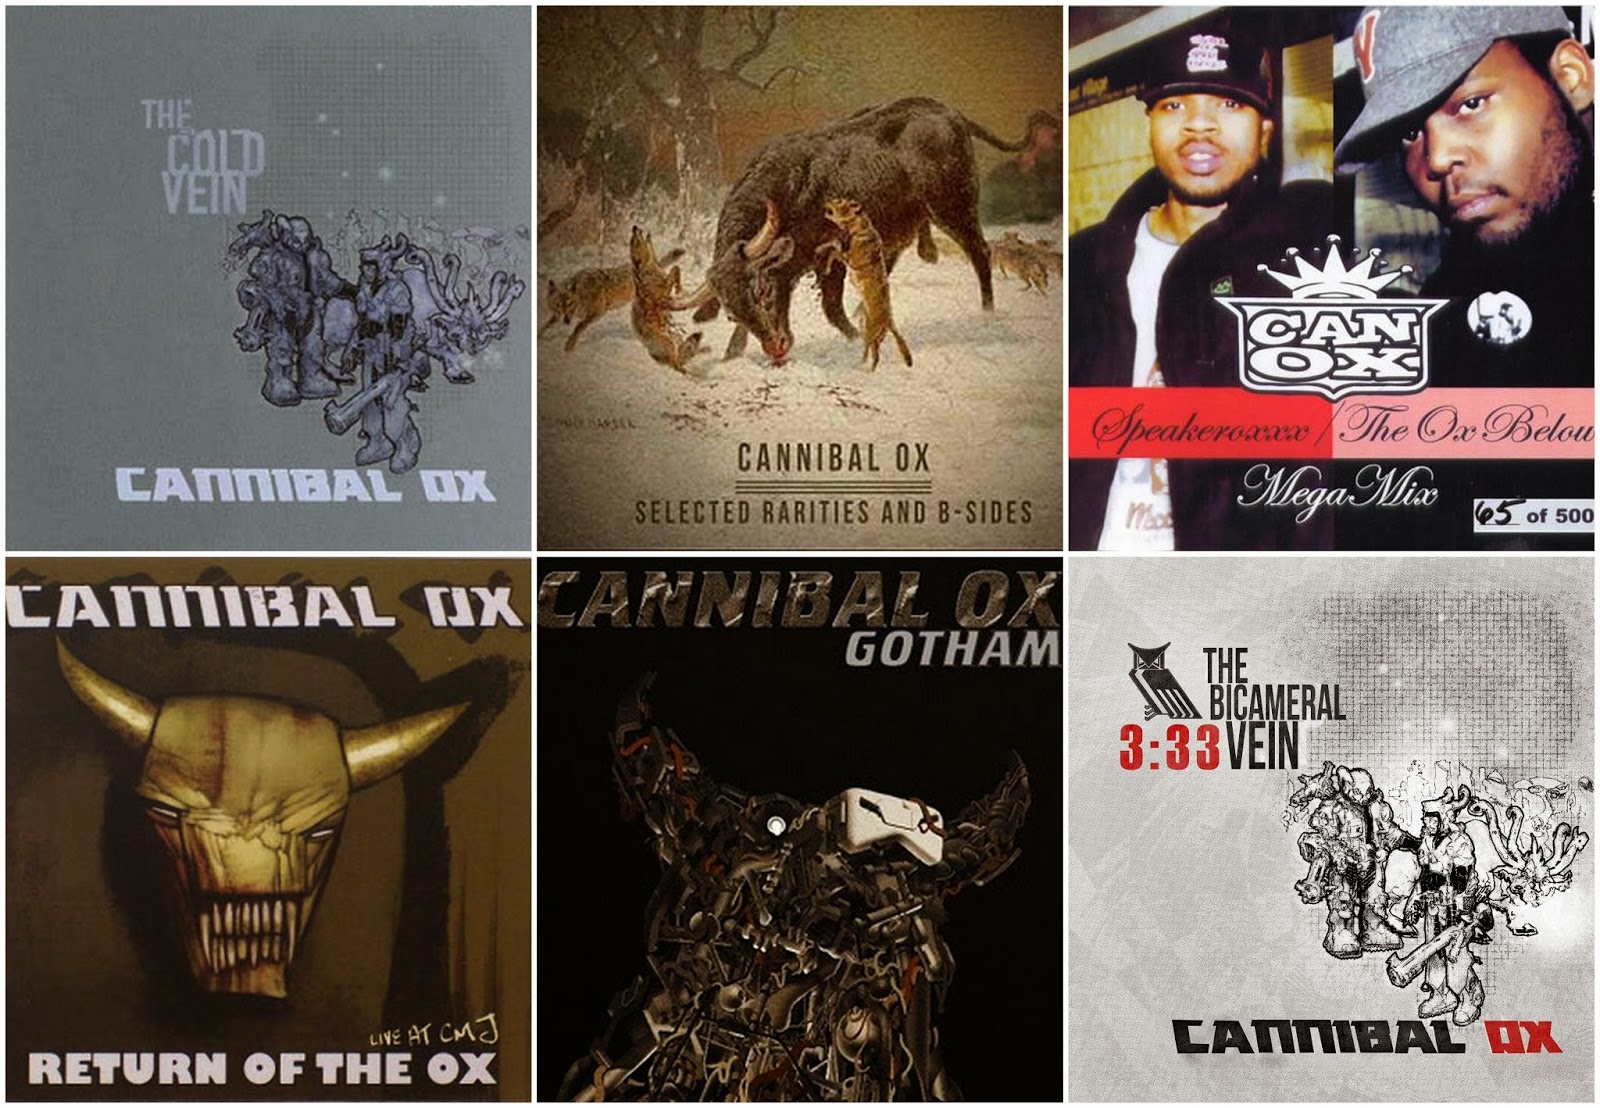 Download lagu Cannibal Ox (19.32 MB) - Mp3 Free Download